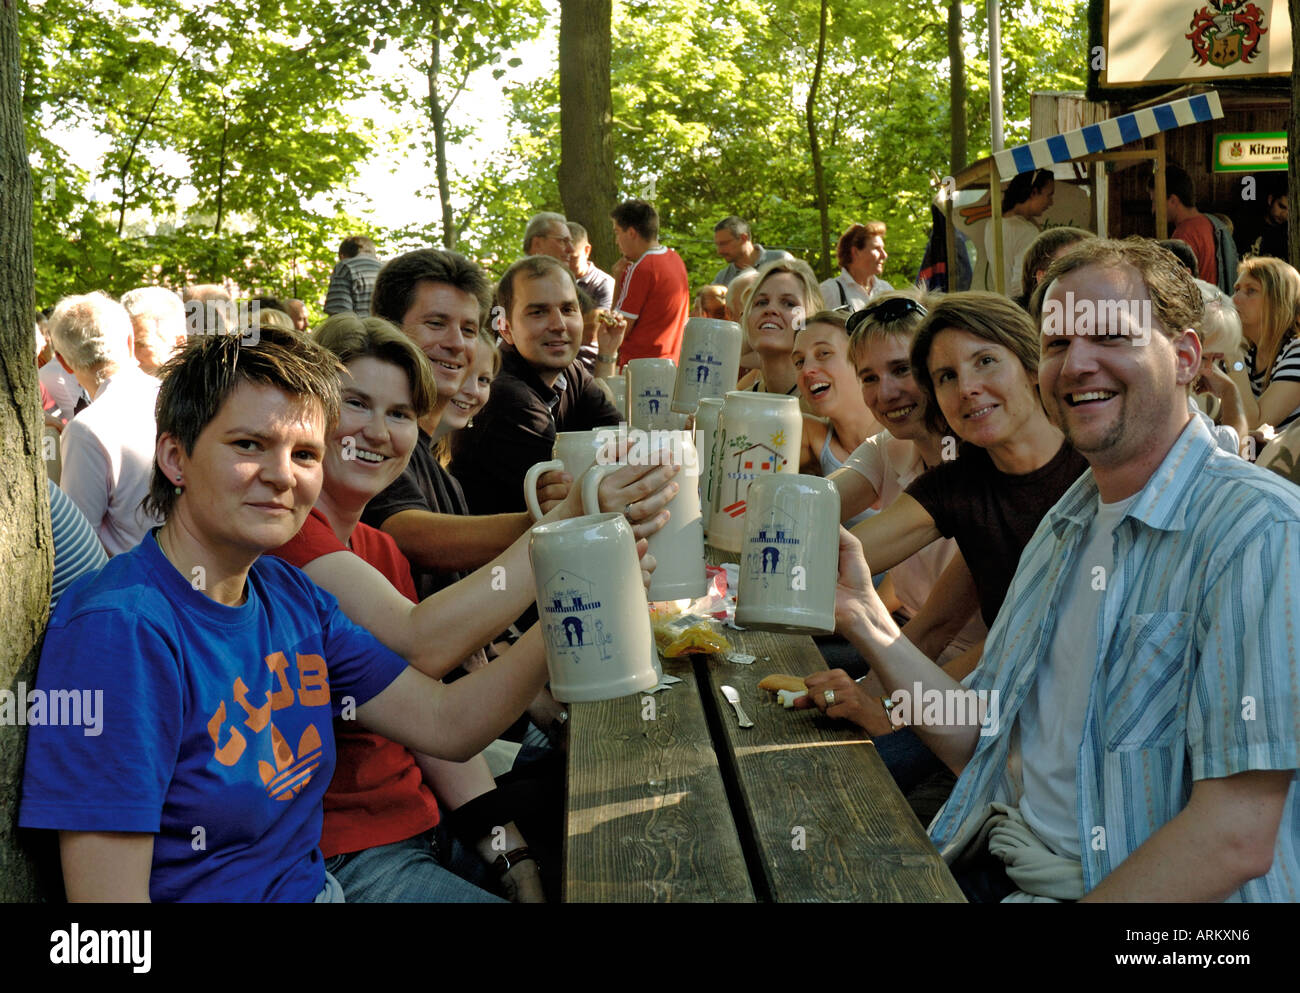 Happy, smiling beer drinkers at Erlangen Bierfest, Germany. Stock Photo